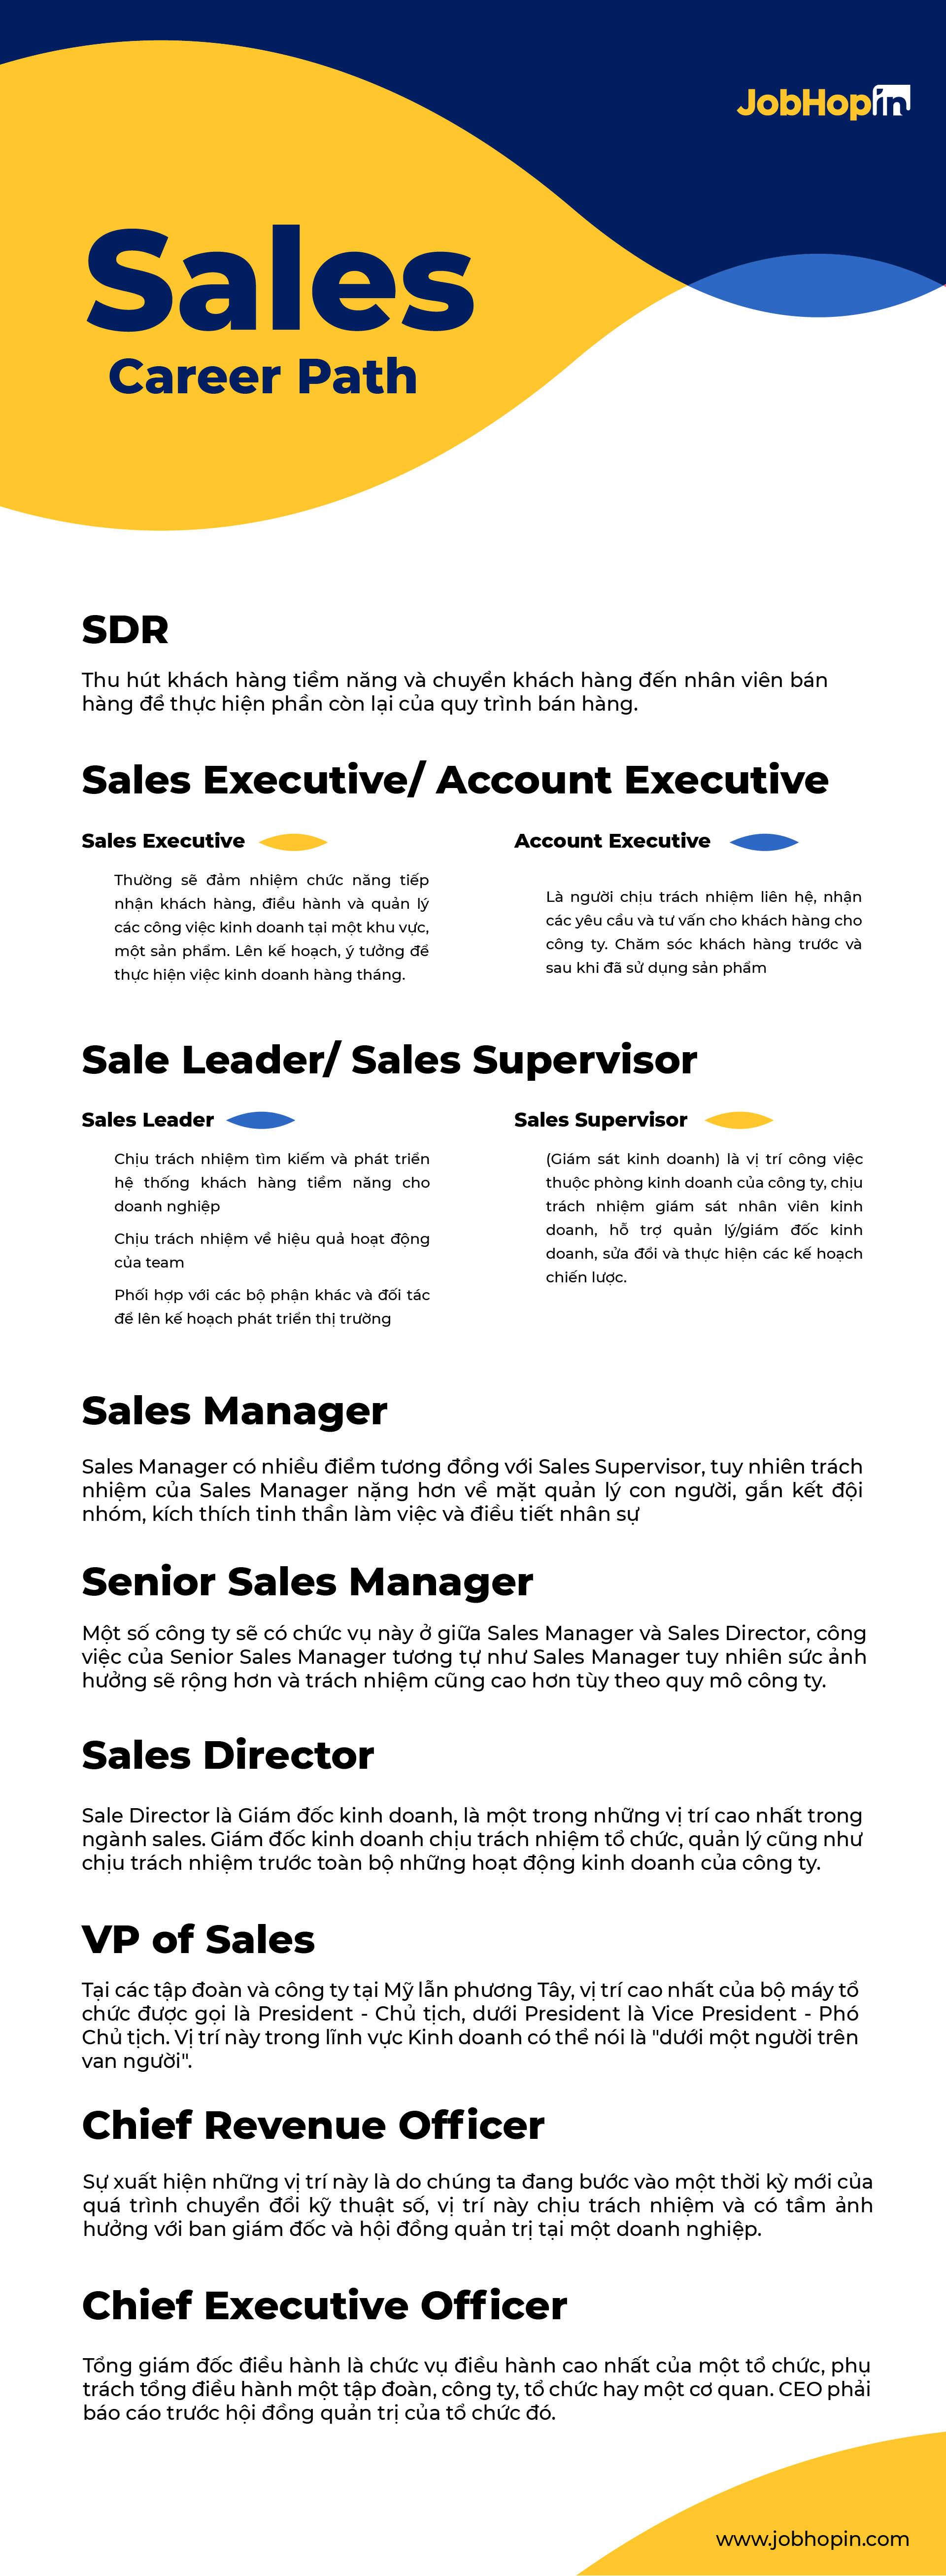 sales-career-path-jobhopin